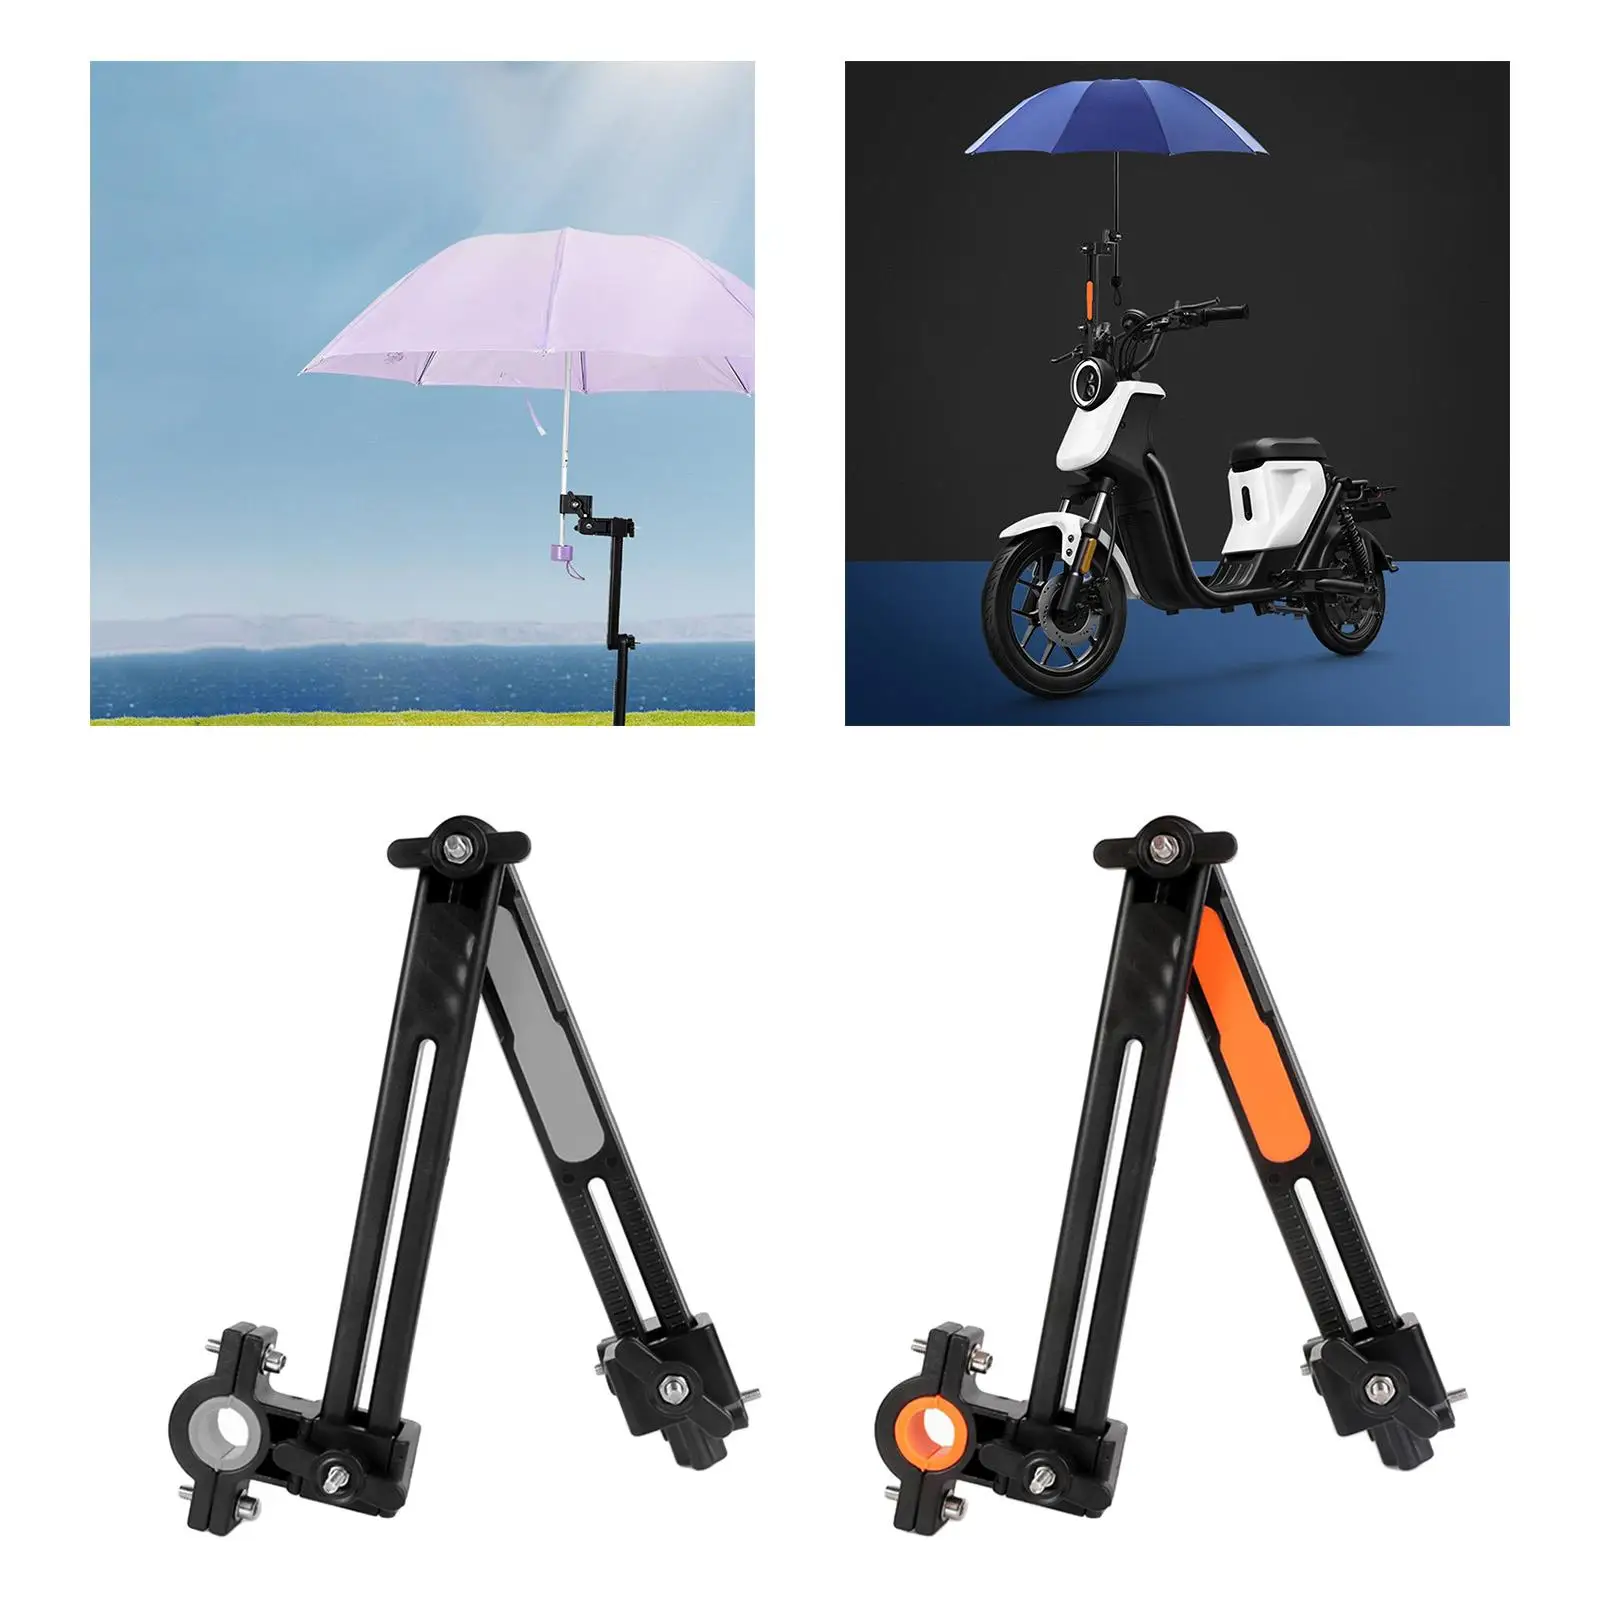 Universal Umbrella Holder Foldable Attachment for Beach Chair Golf Push Cart